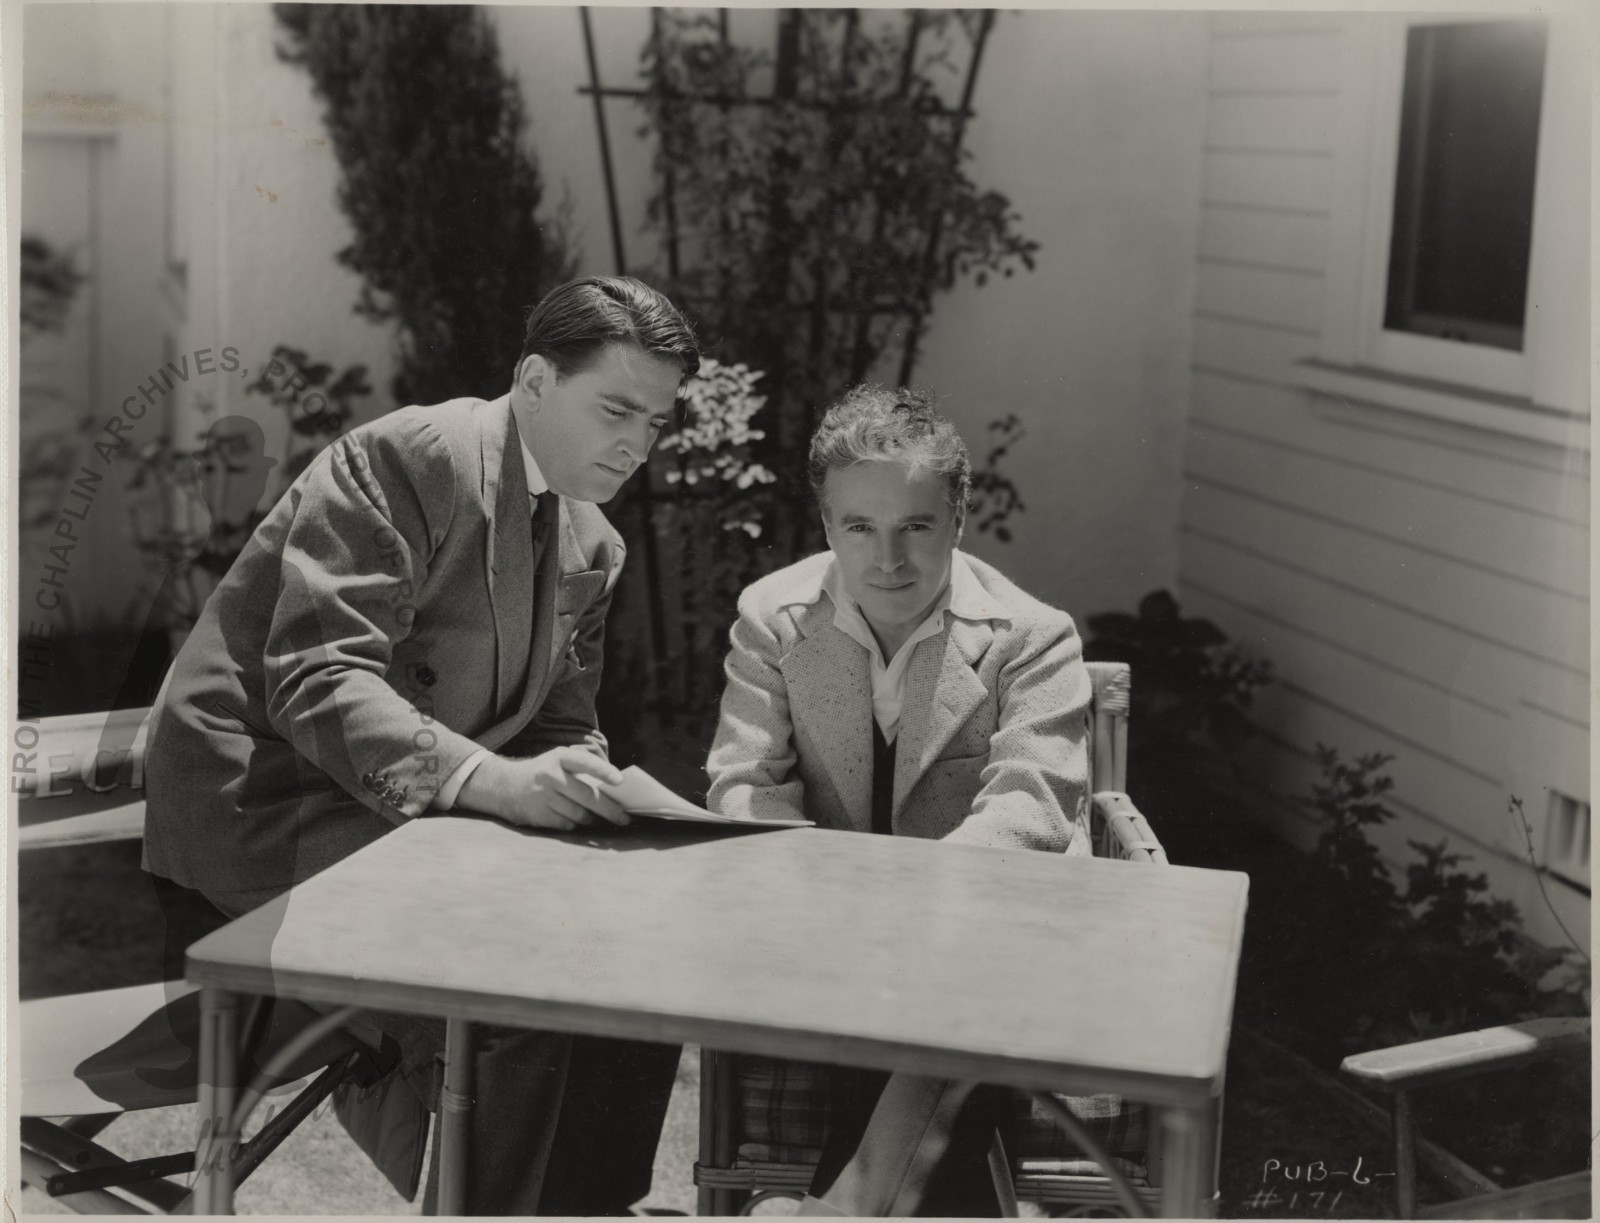 Willson and Chaplin, 1940